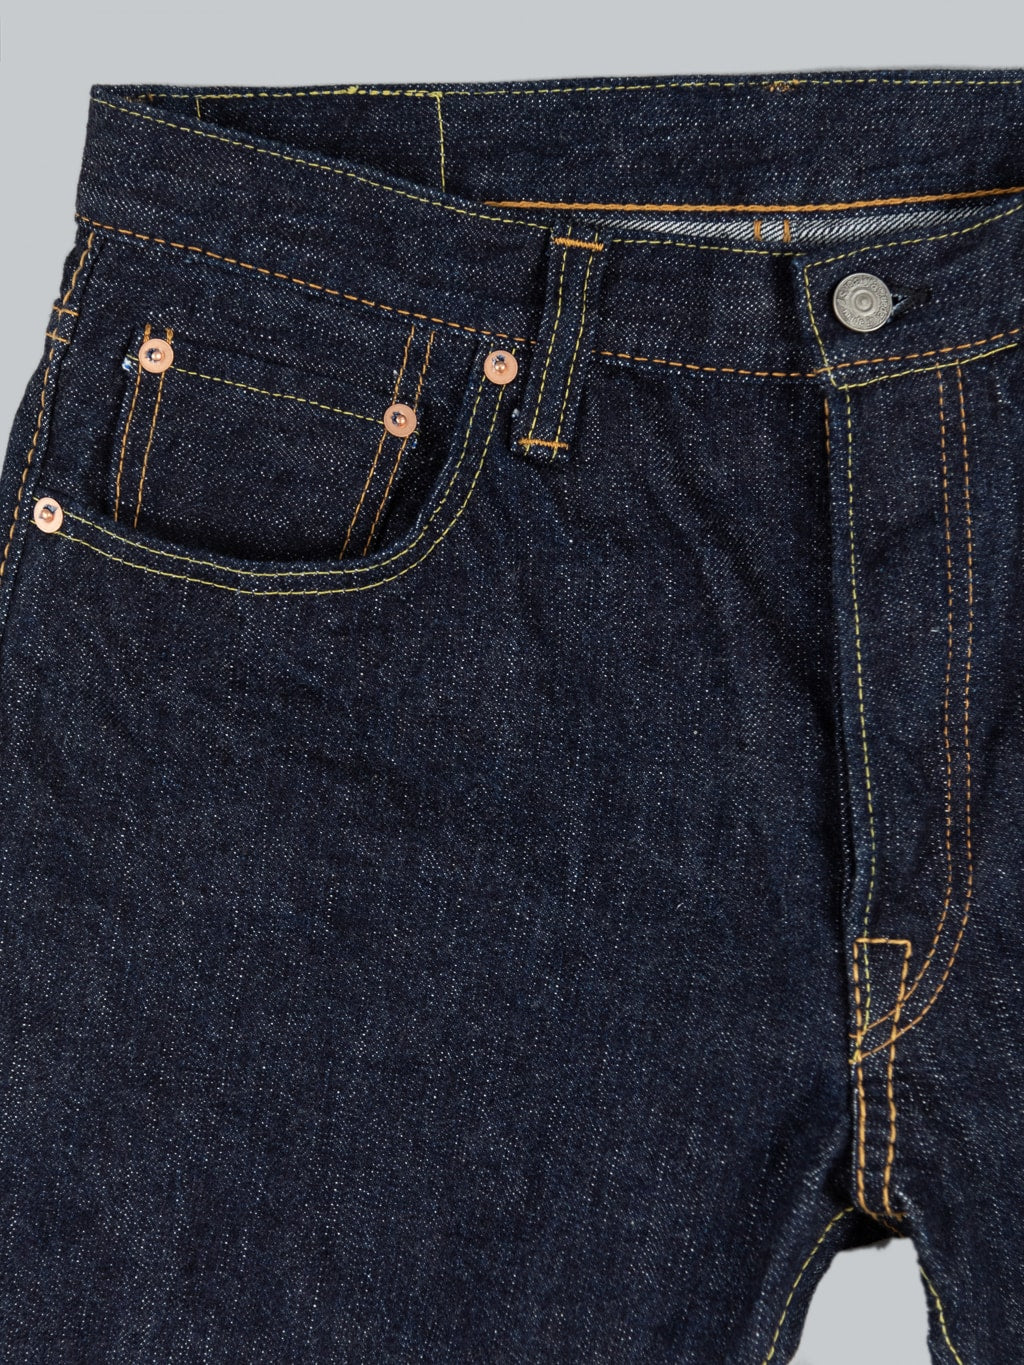 Pure Blue Japan XX 003 Regular Straight Jeans pocket details